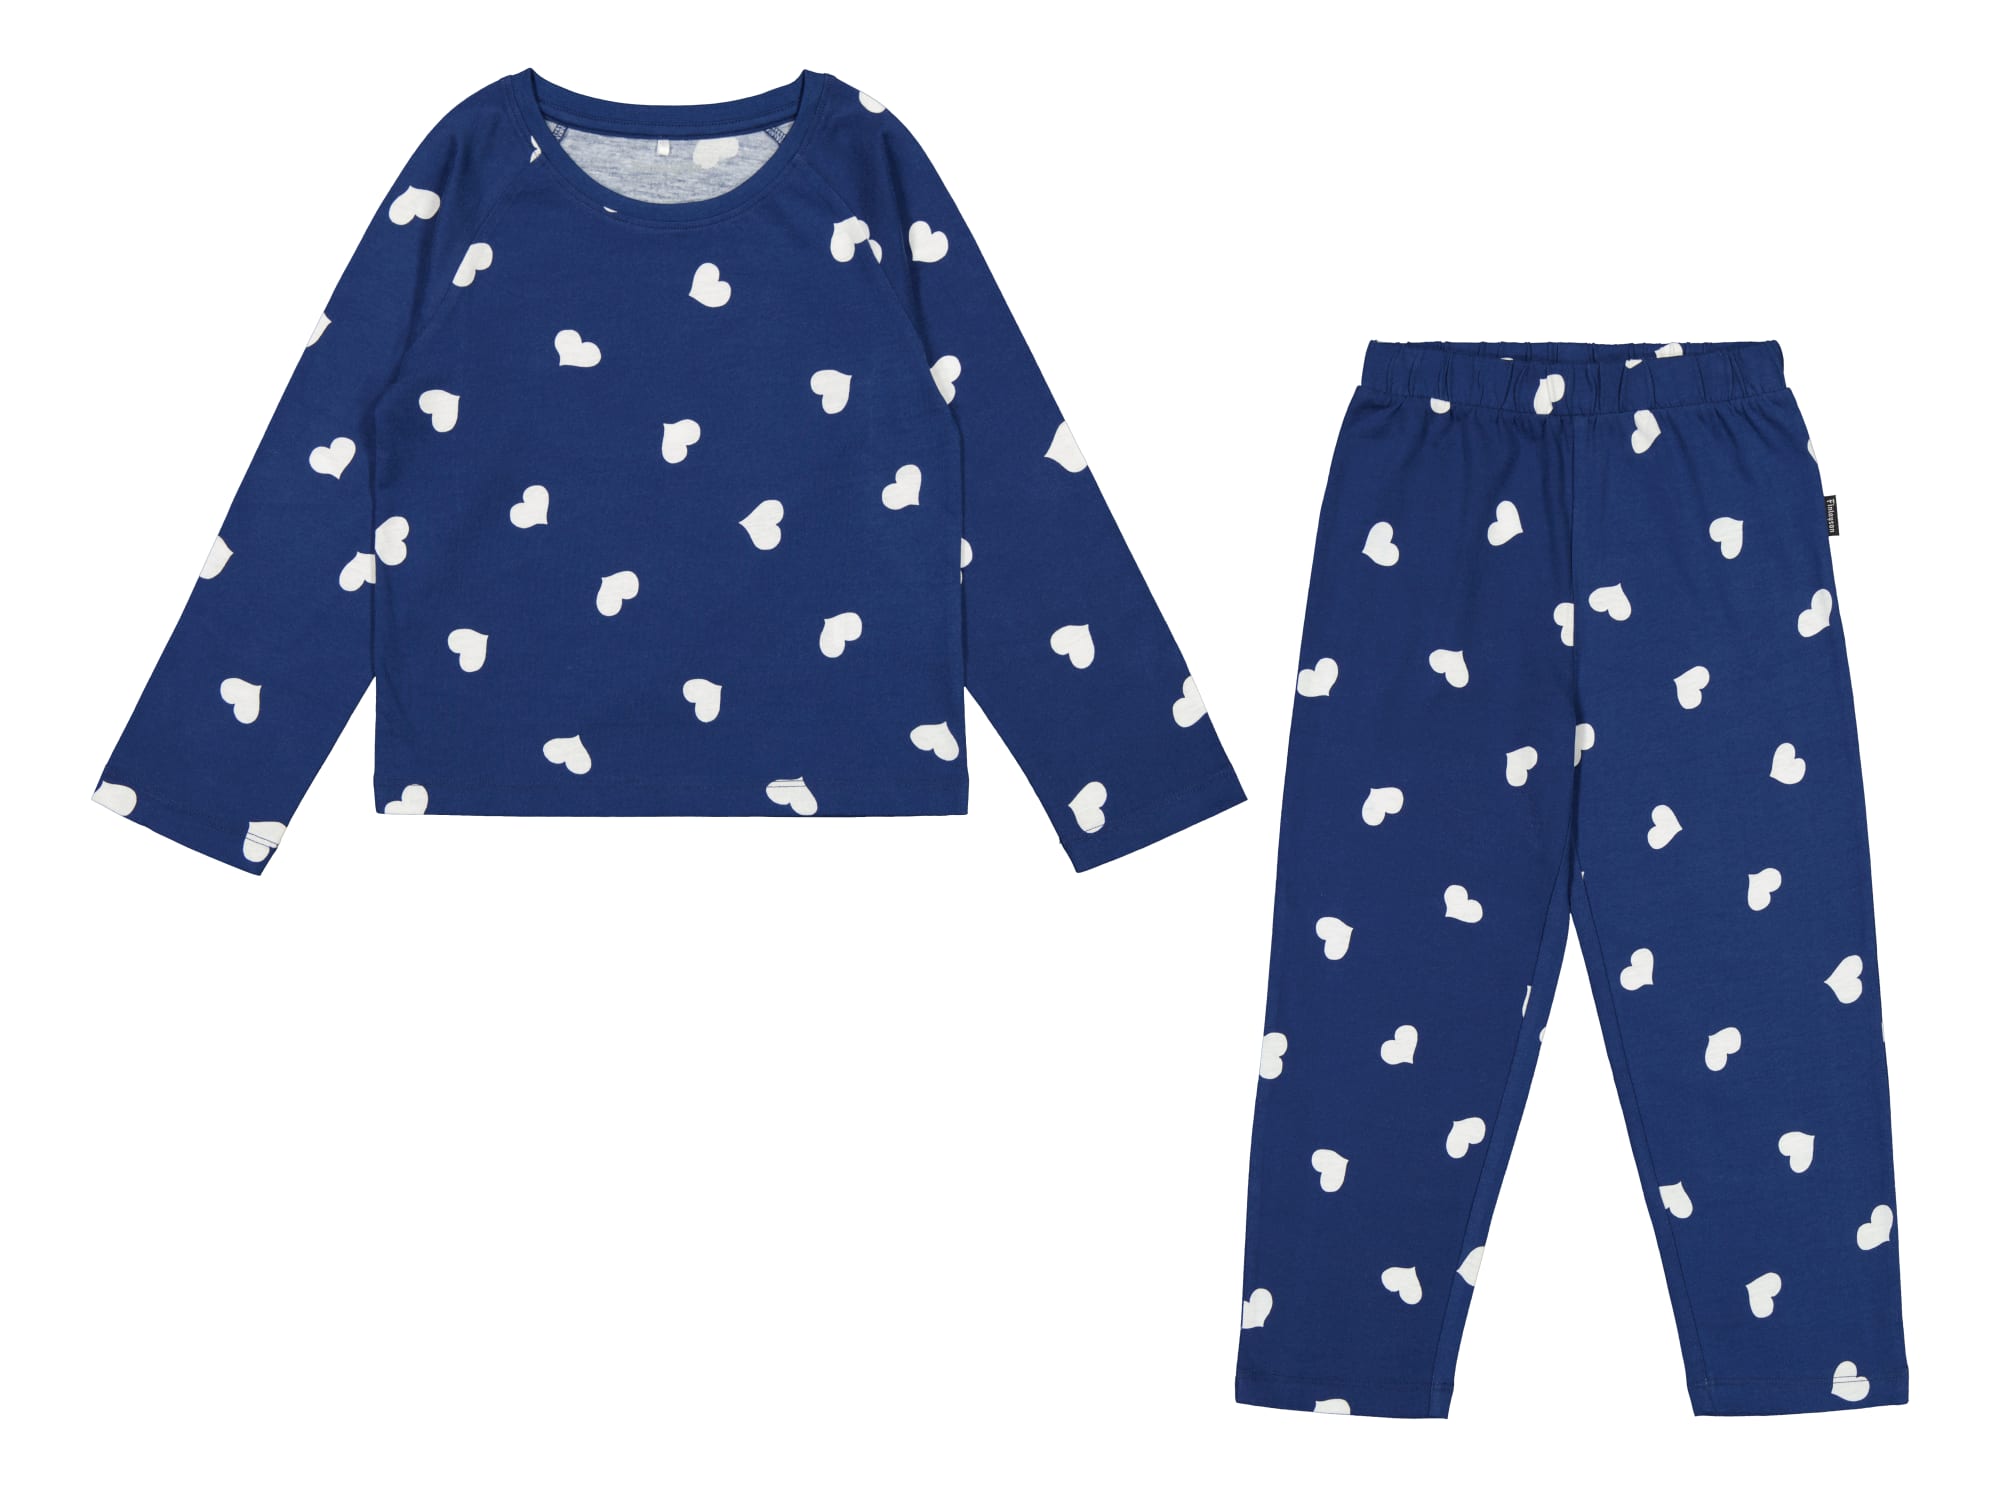 Onni Children's Pajama